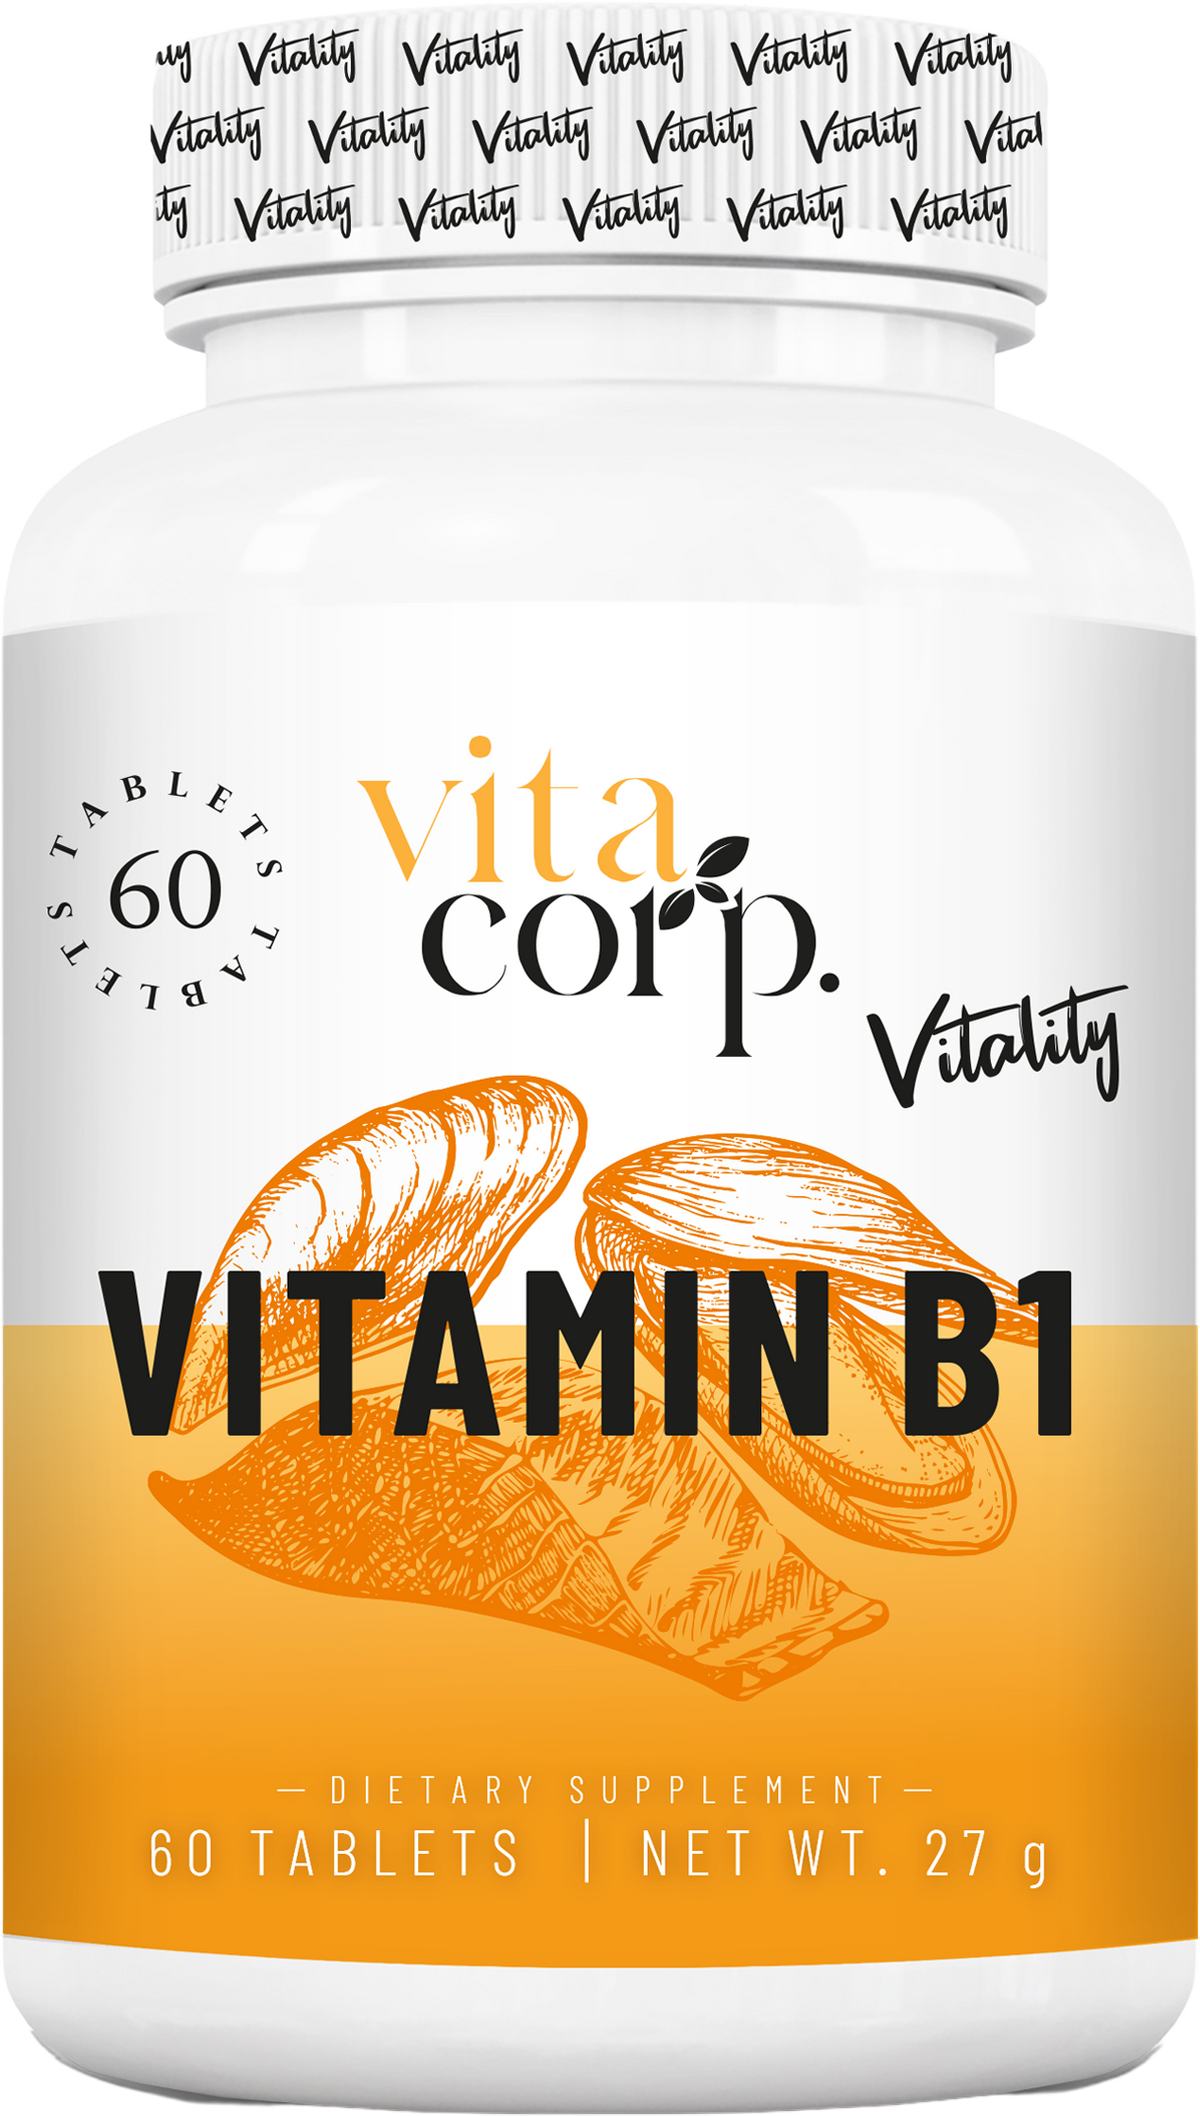 Vitamin B1 5.5 mg - BadiZdrav.BG